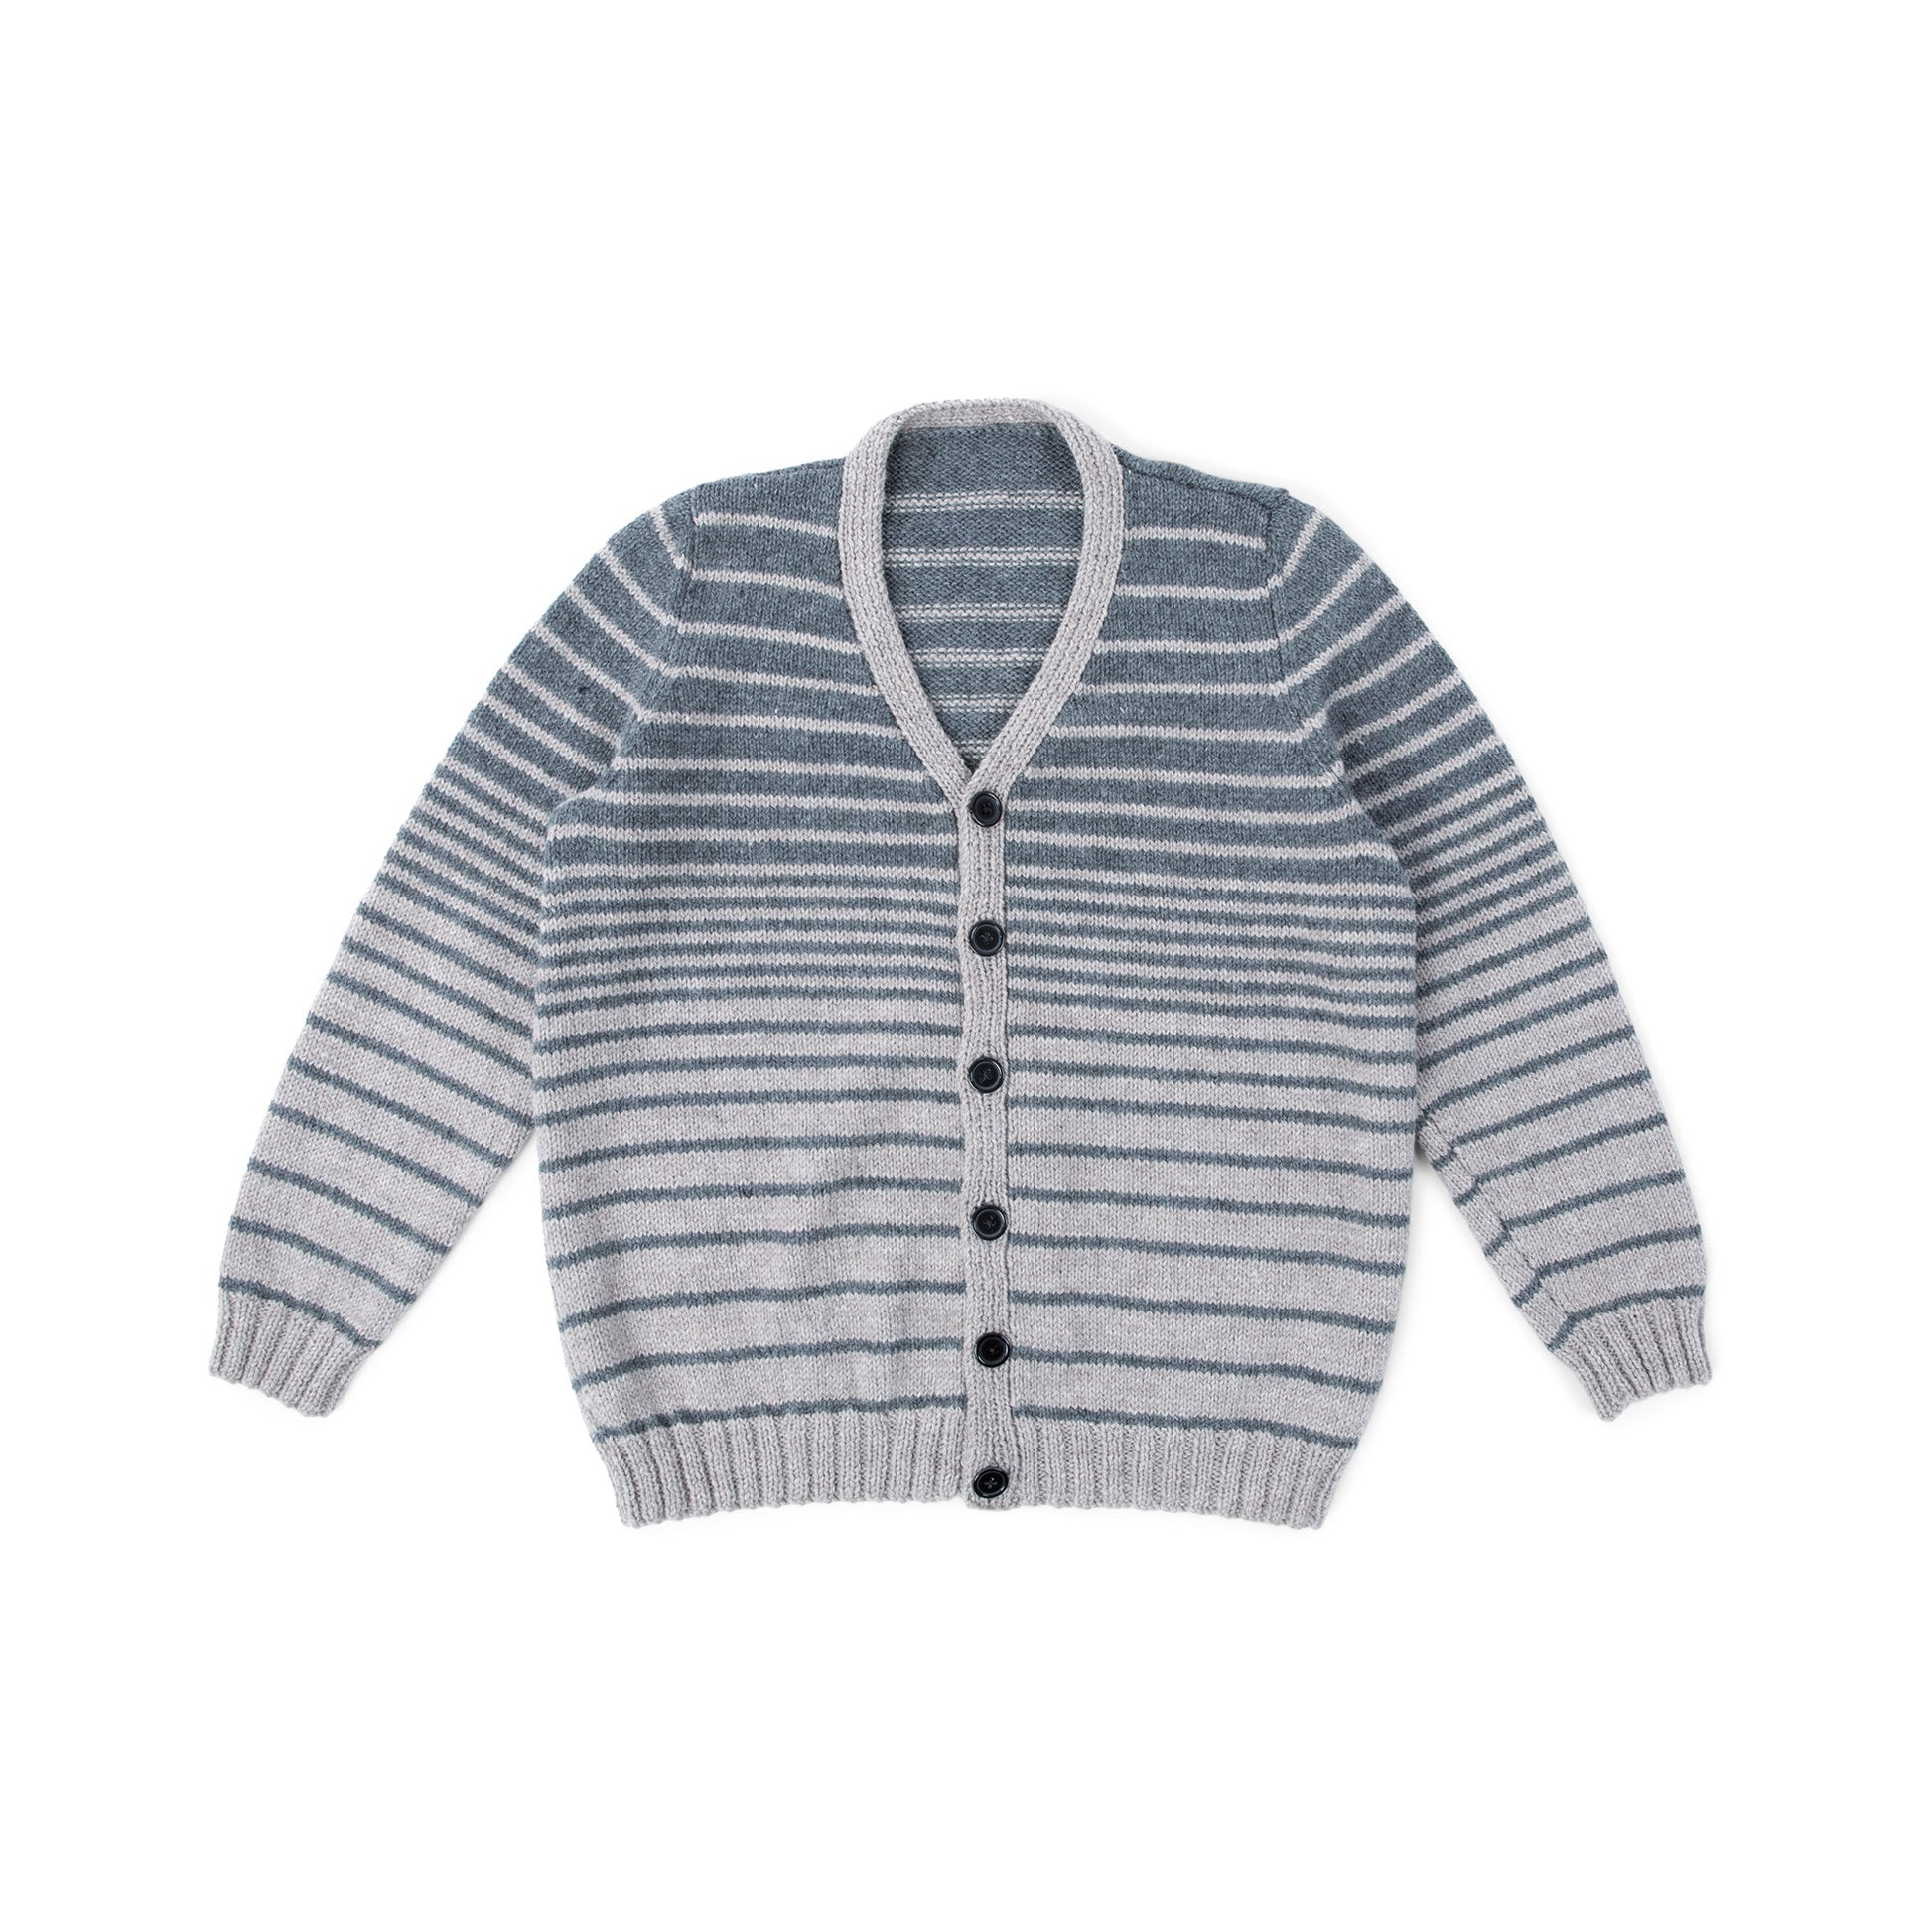 Free Patons Knit Reverb Stripes Cardigan Pattern